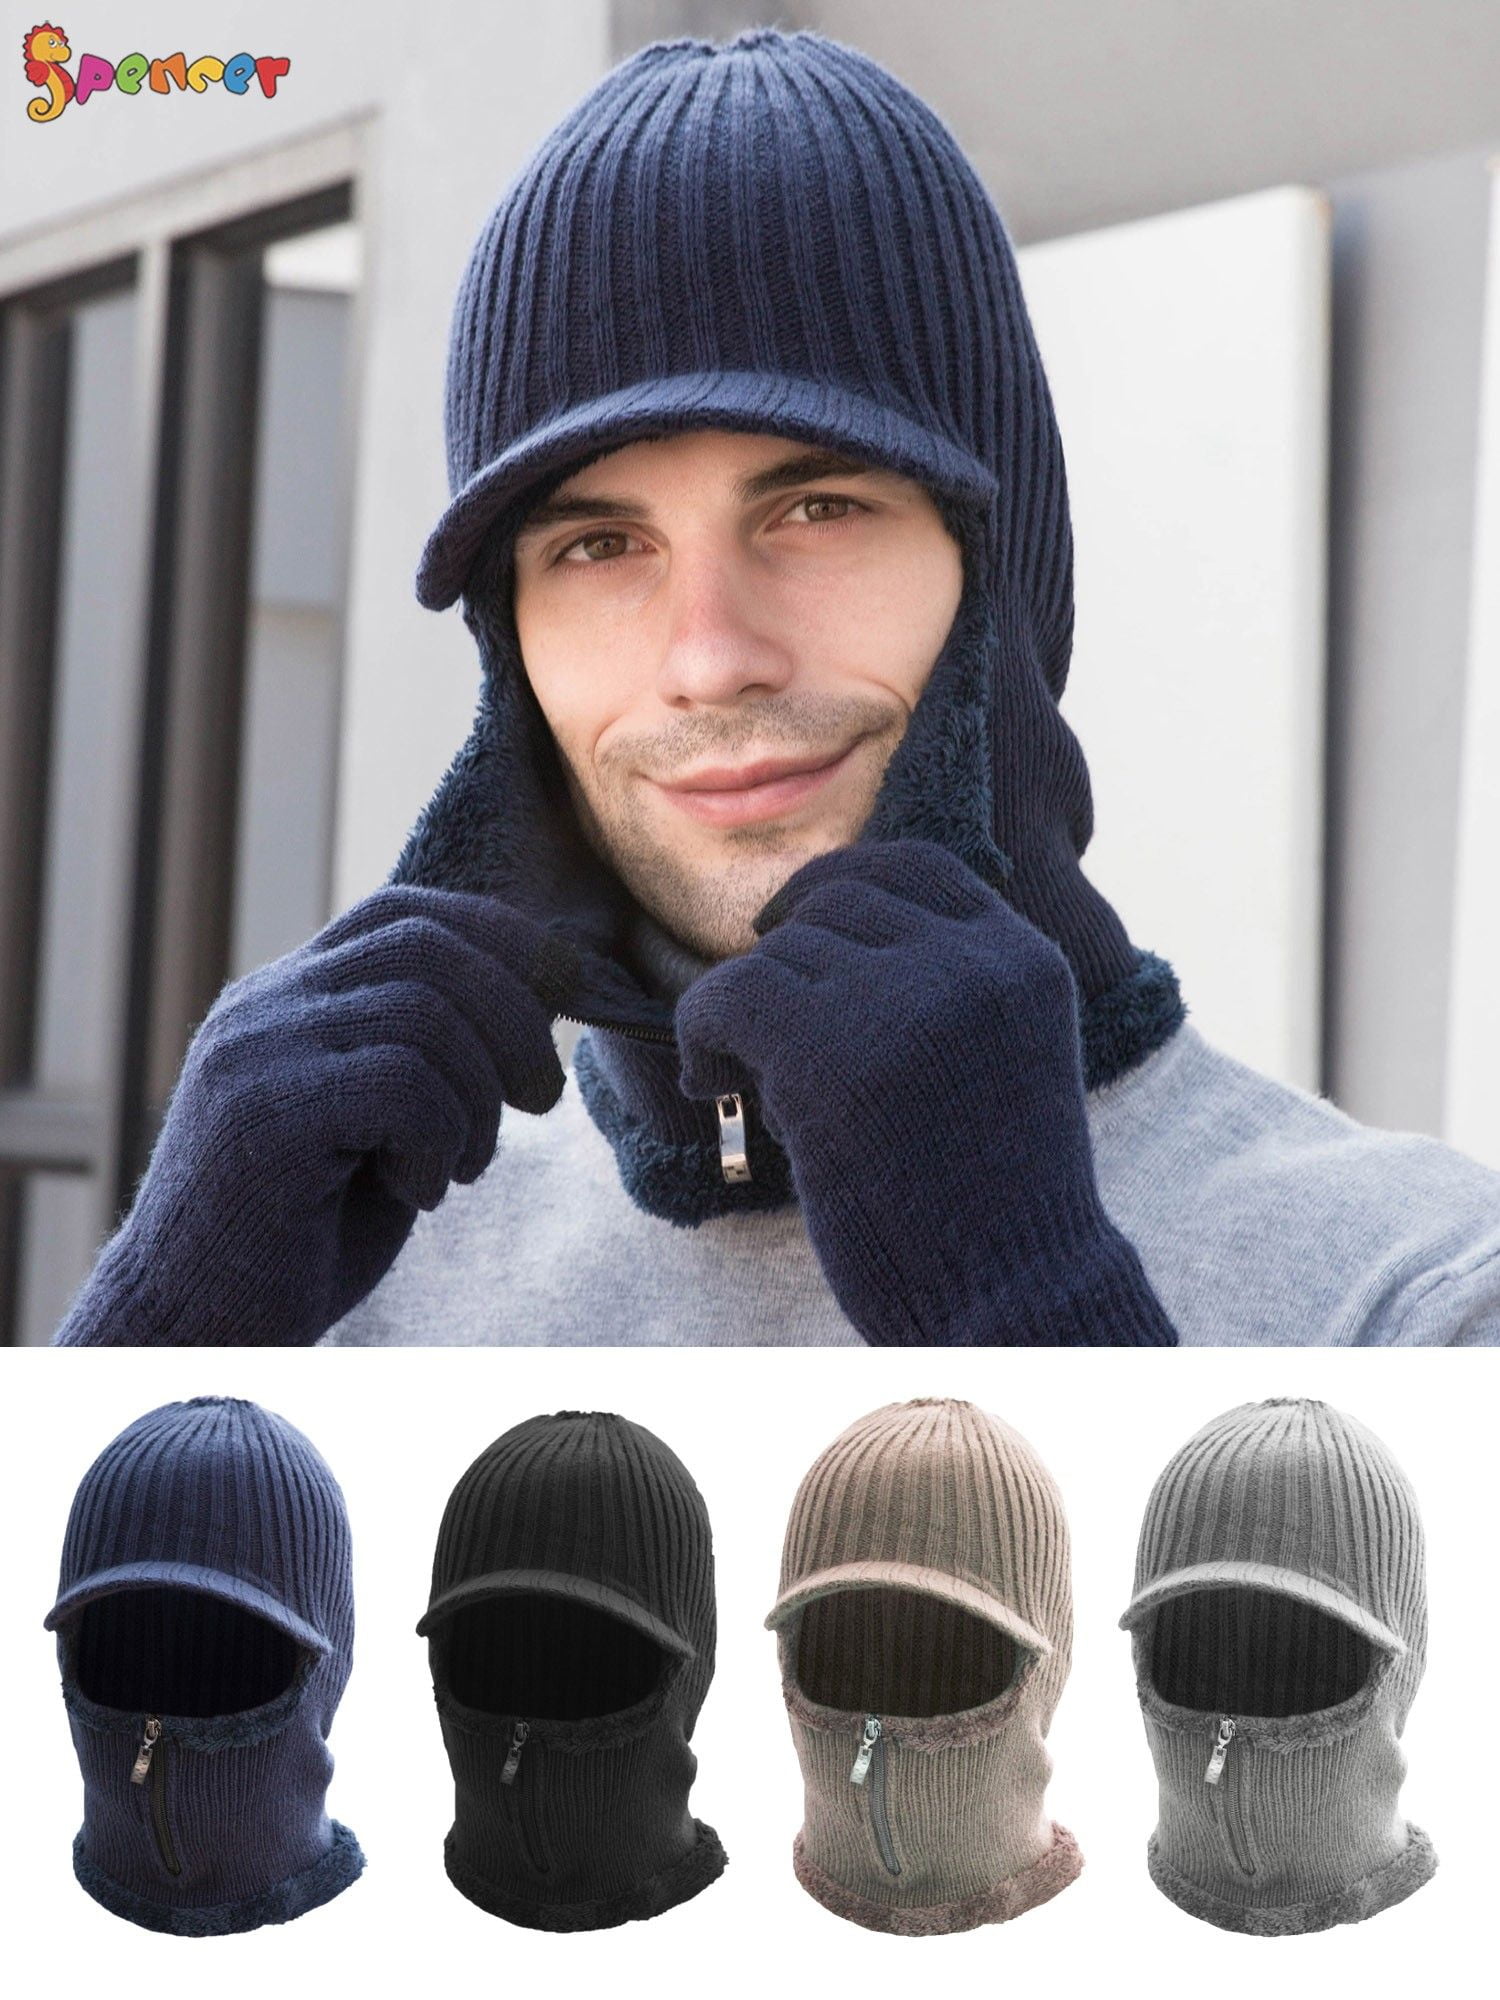 Senose Beanie for Men Women Knit Hat with Button Skull Cap Winter Unisex 2 Pack